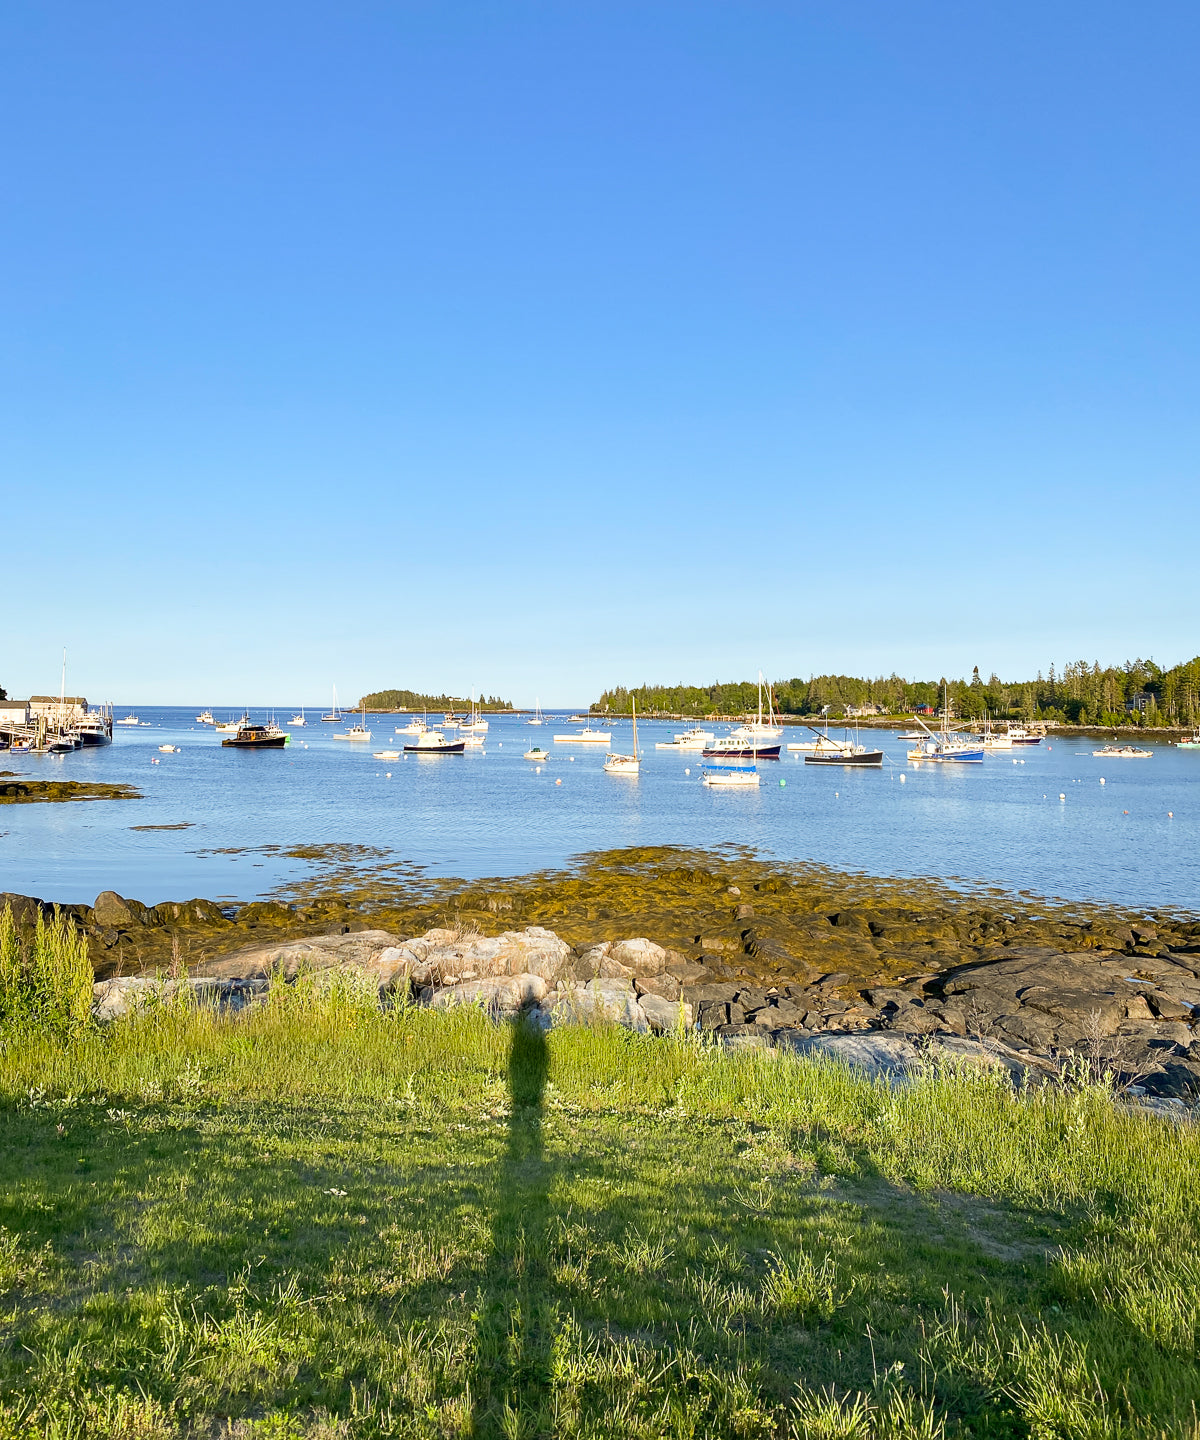 Tenants Harbor, Maine